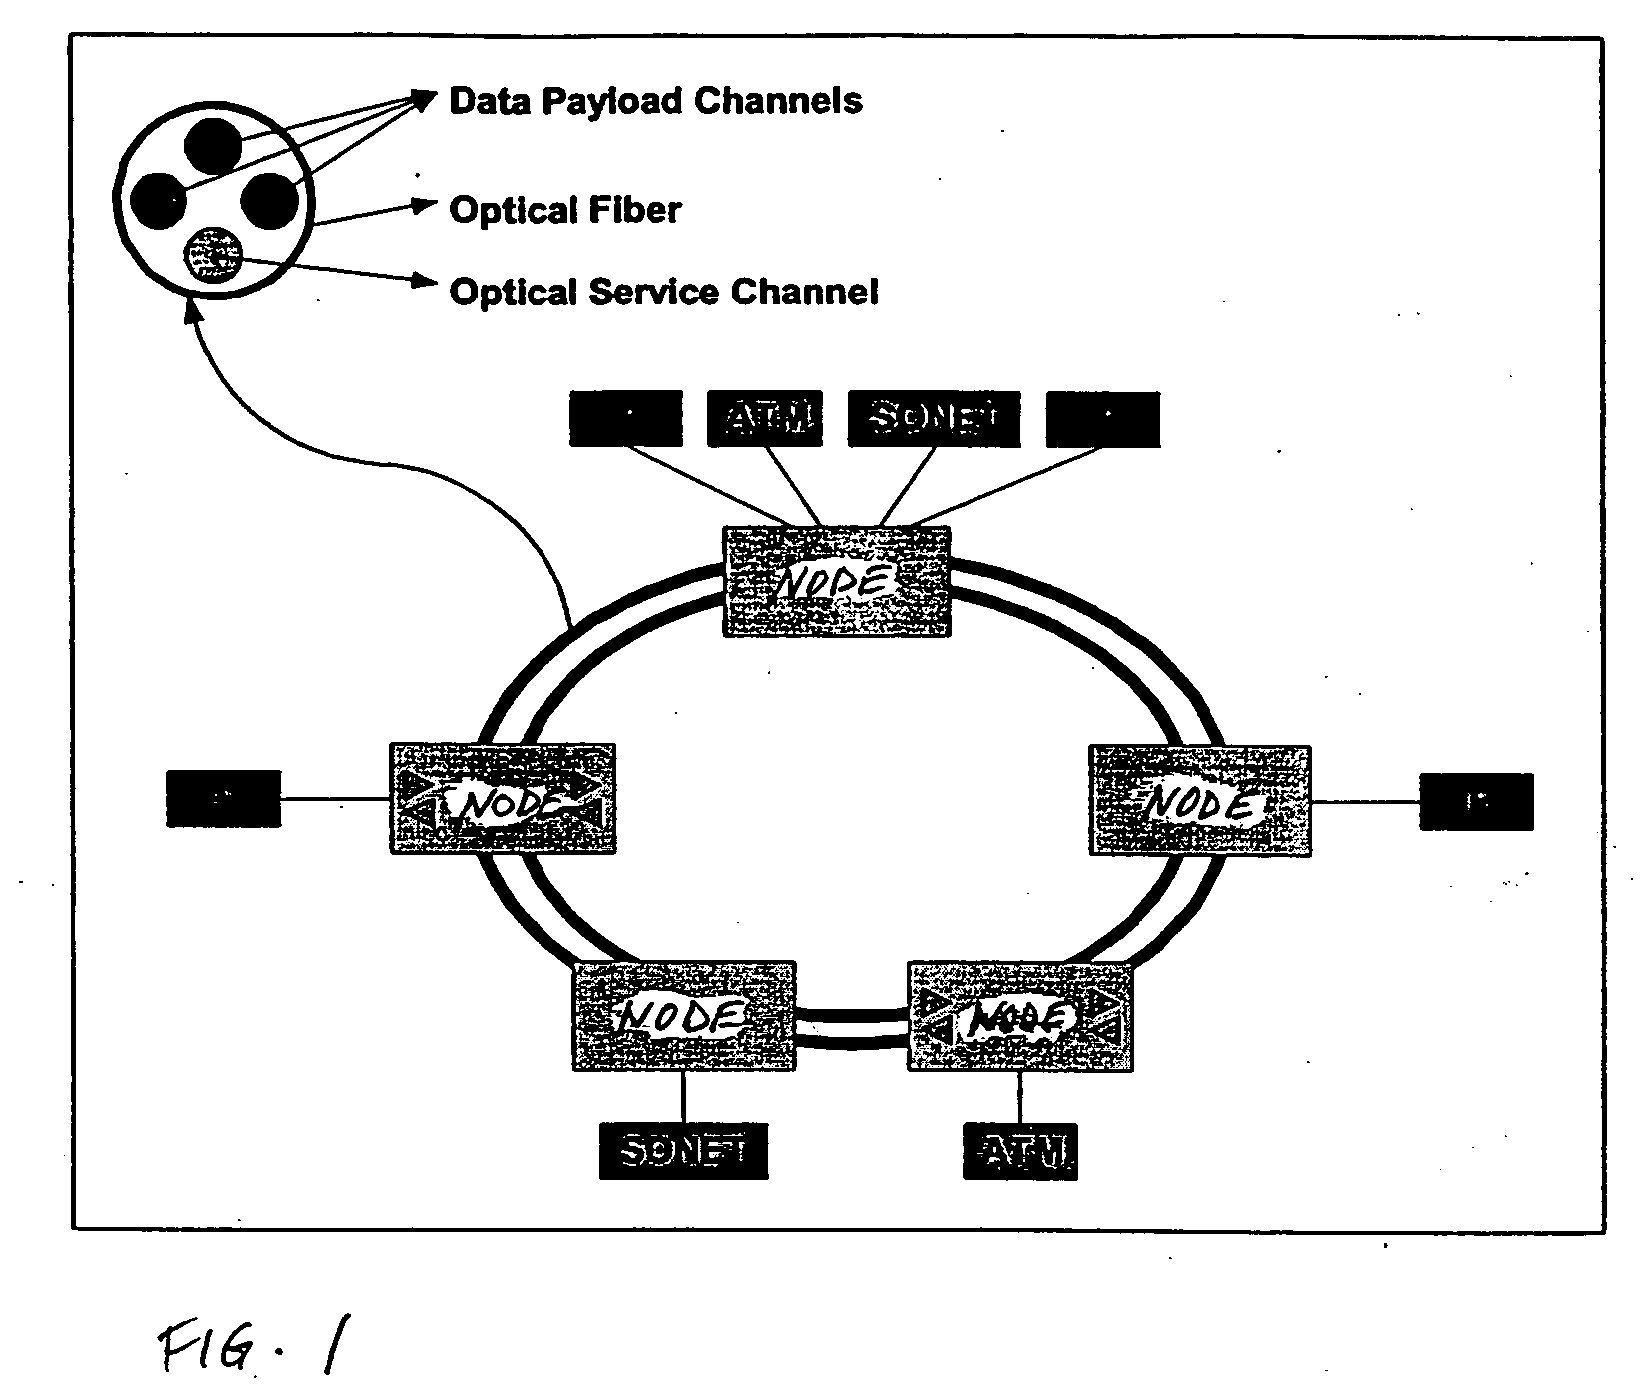 Wavelength and filter arrangement for WDM networks